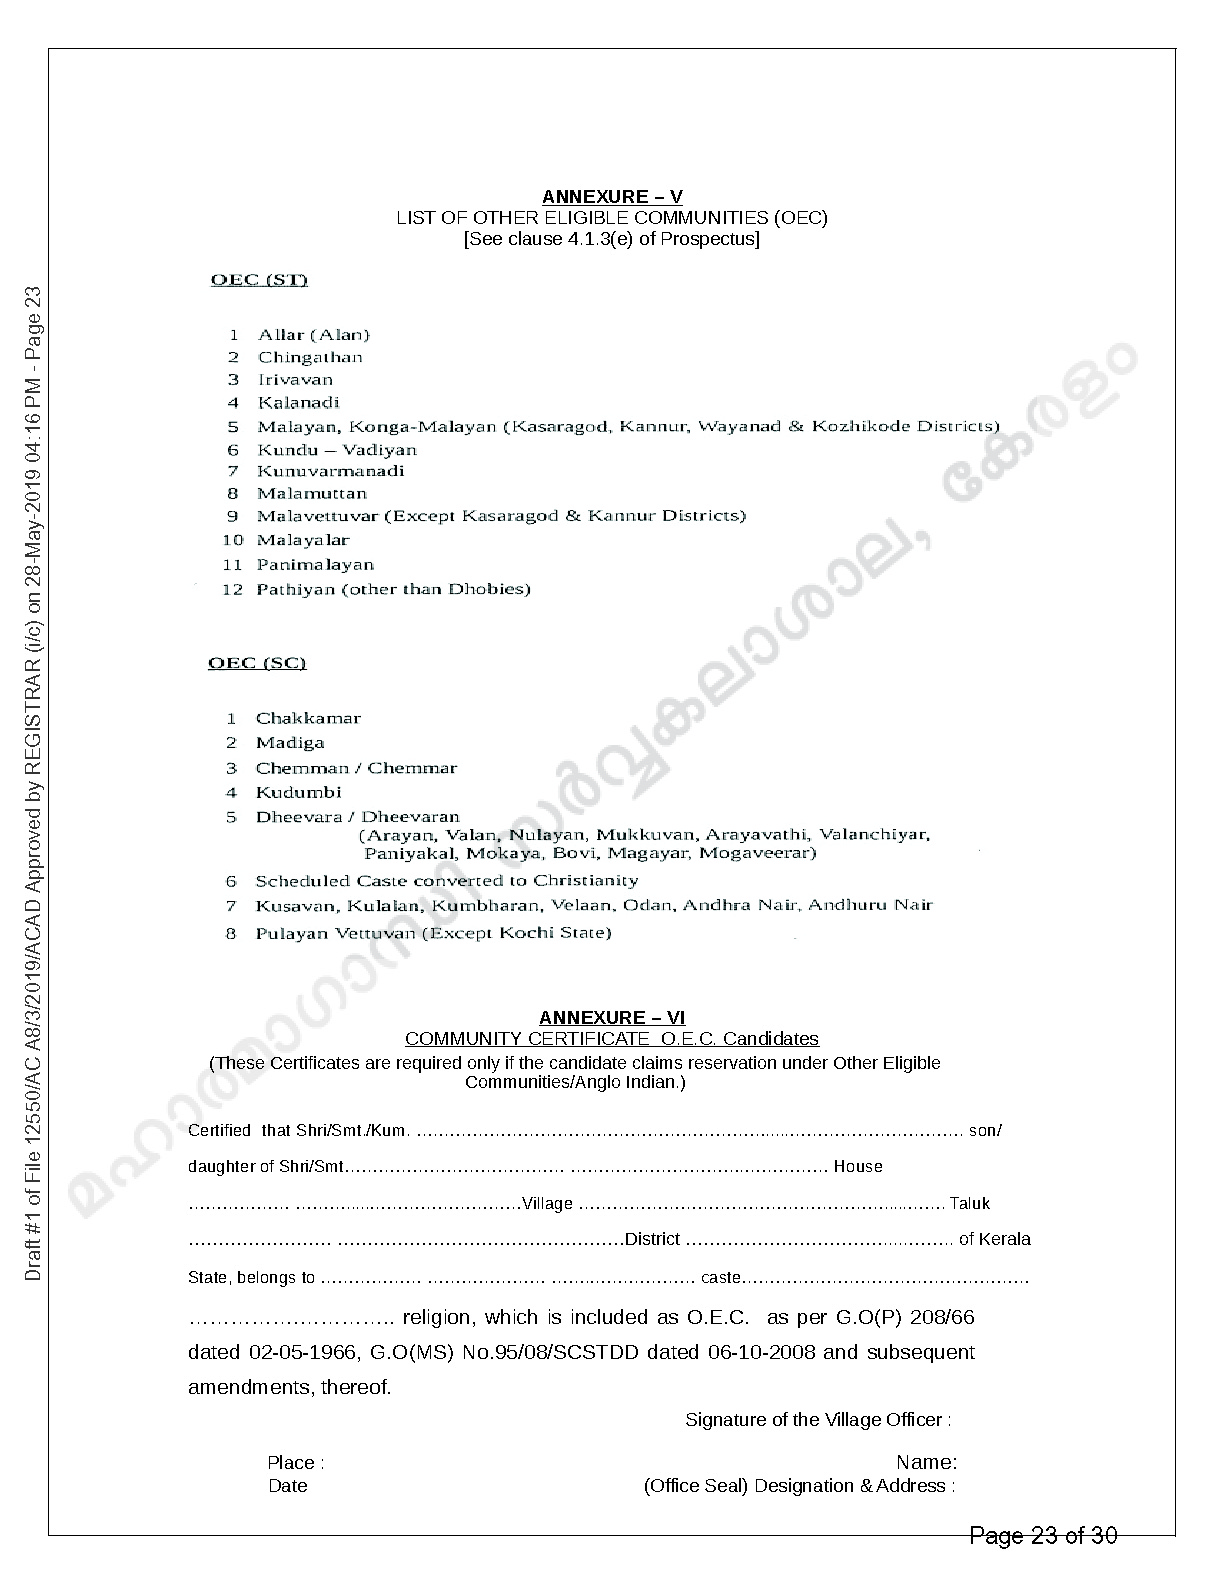 MG University B Ed Prospectus and Application form 2019 2020 - Notification Image 15